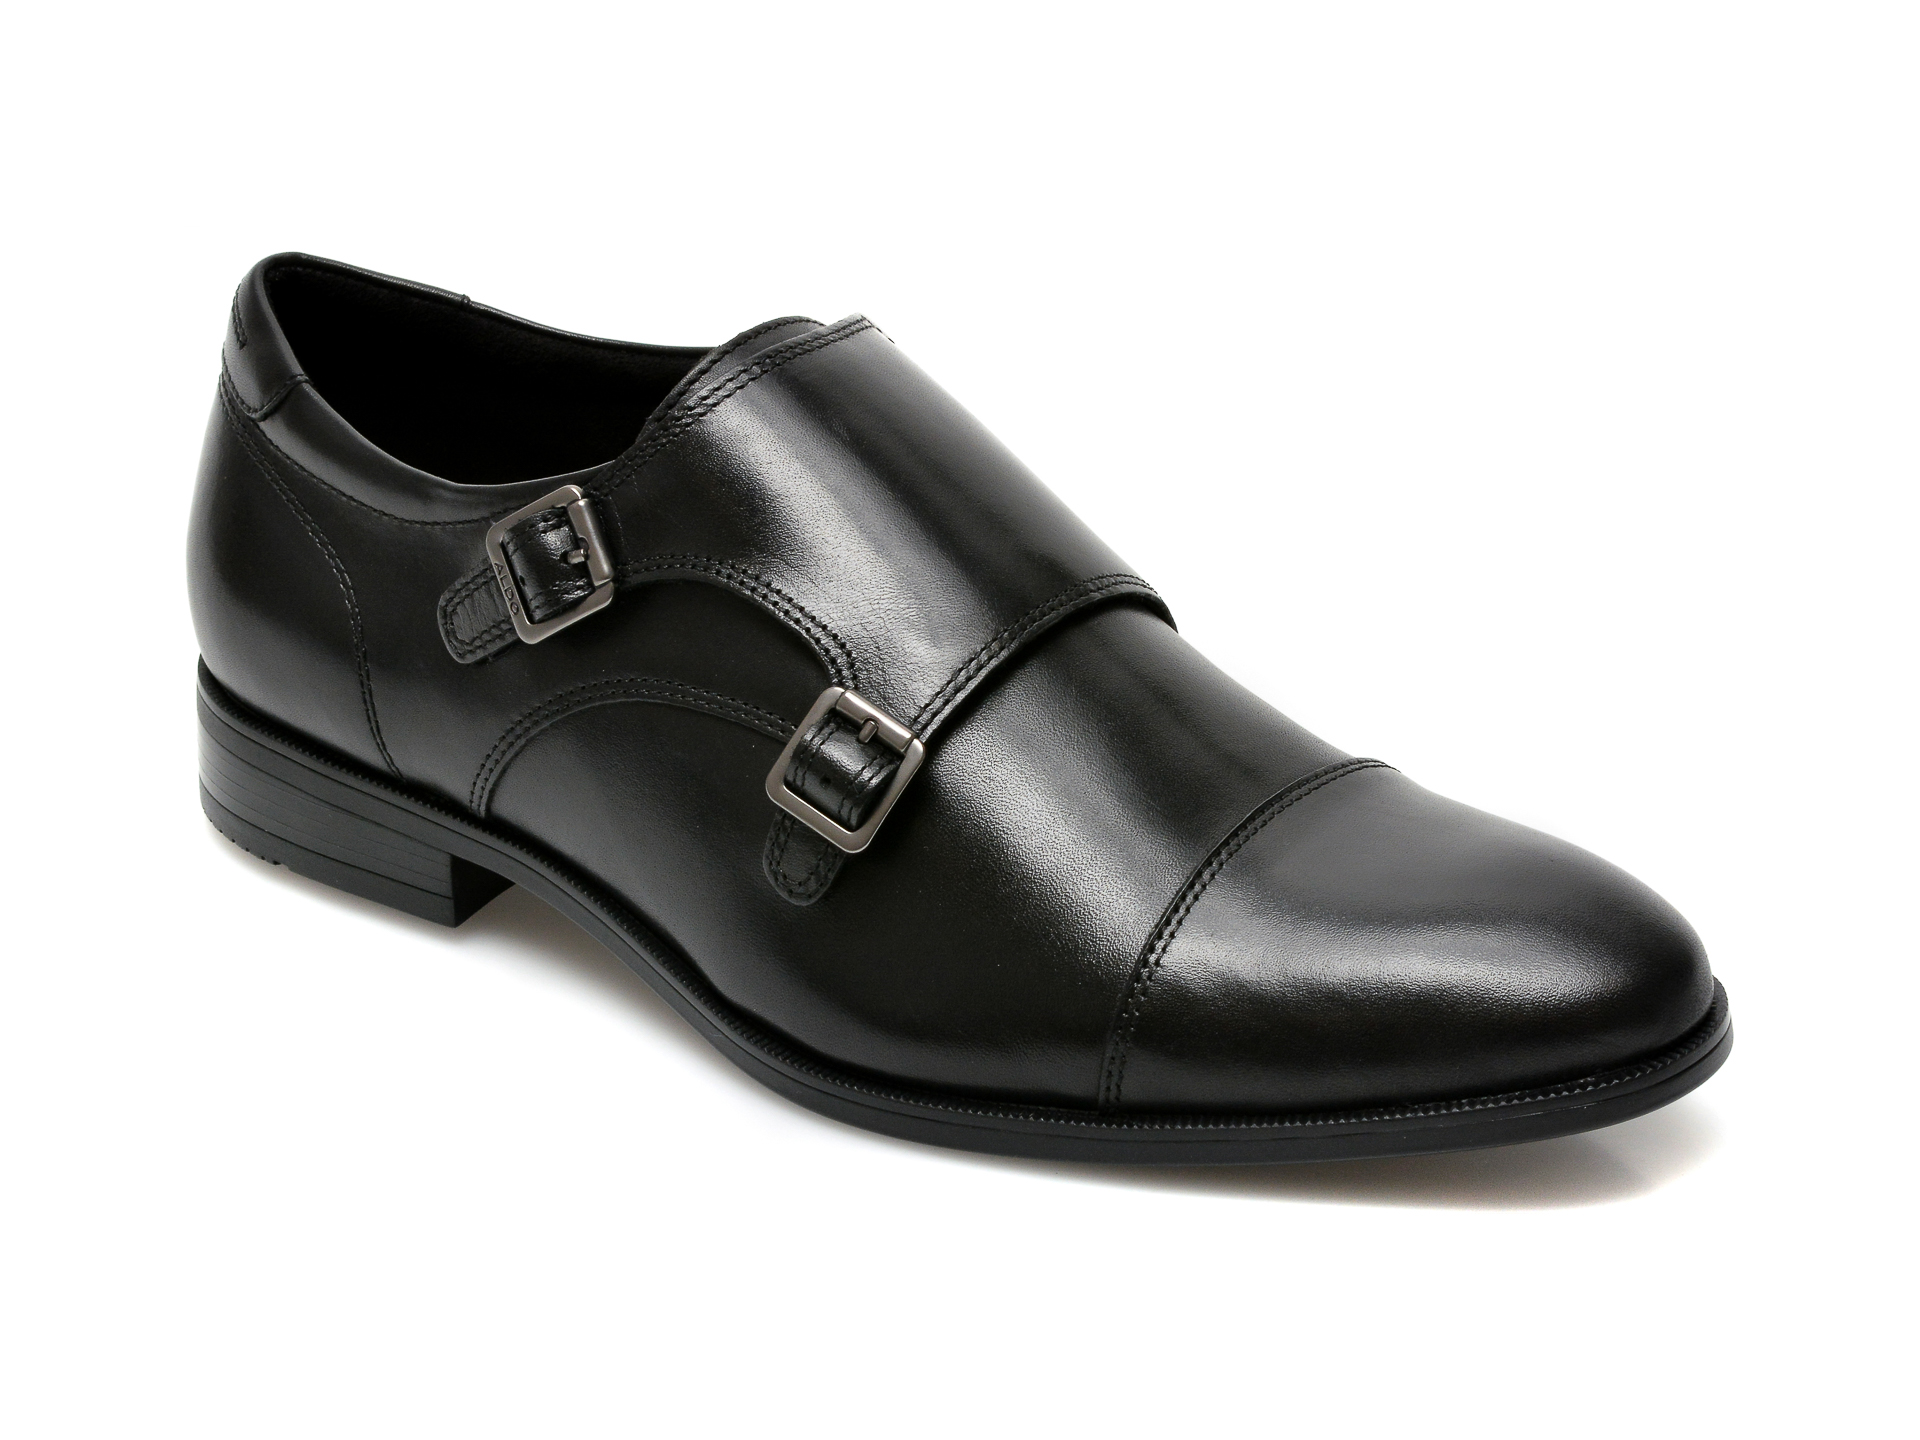 Pantofi ALDO negri, Holtlanflex001, din piele naturala imagine otter.ro 2021